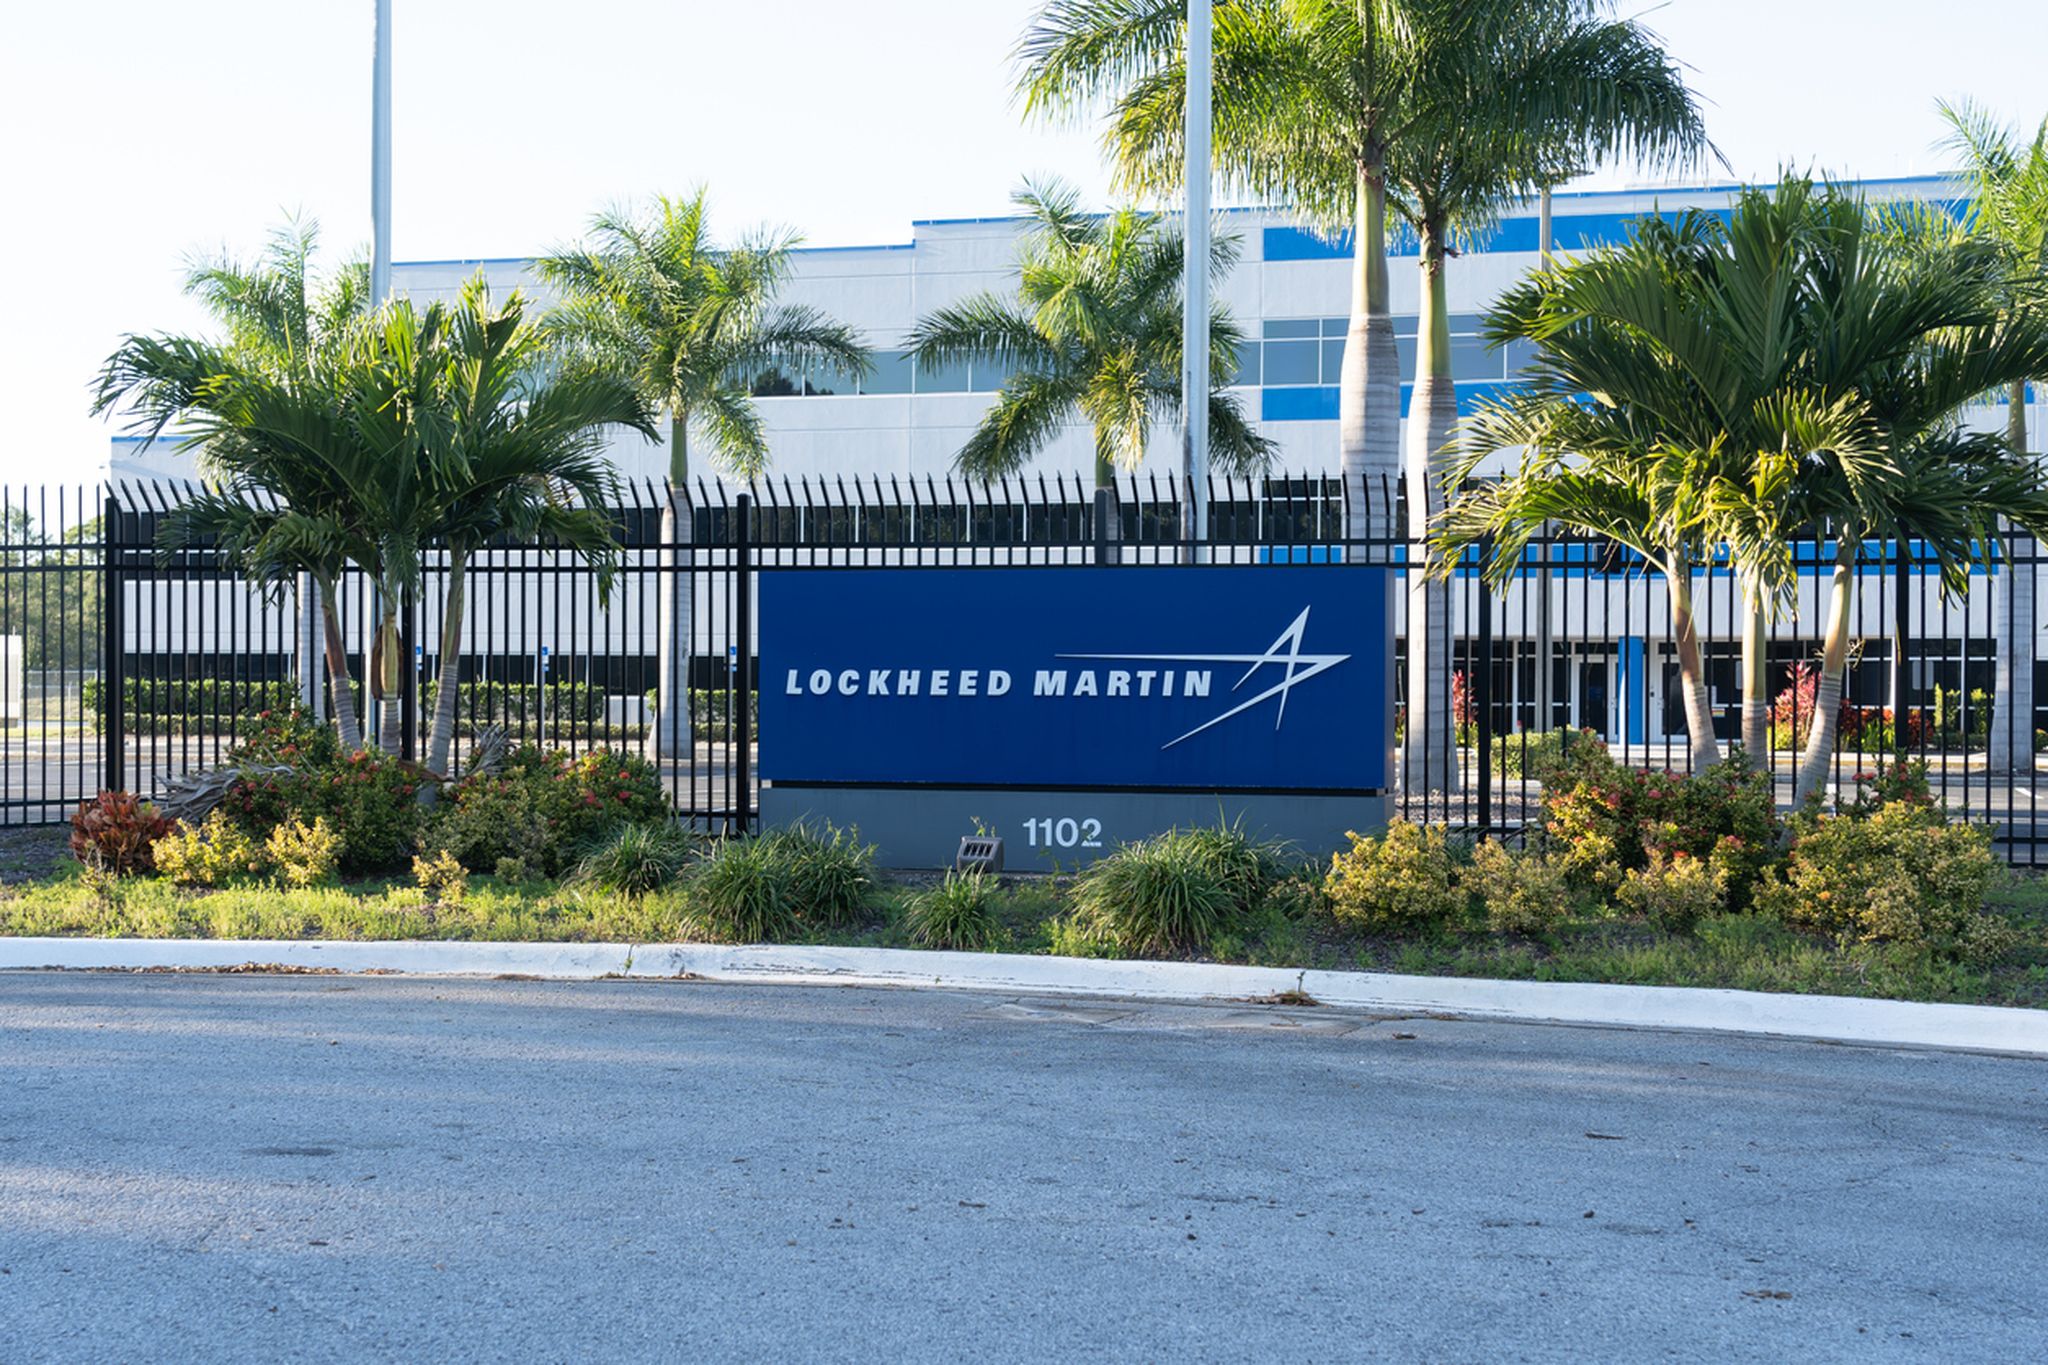 Lockheed Martin valt terug richting steun